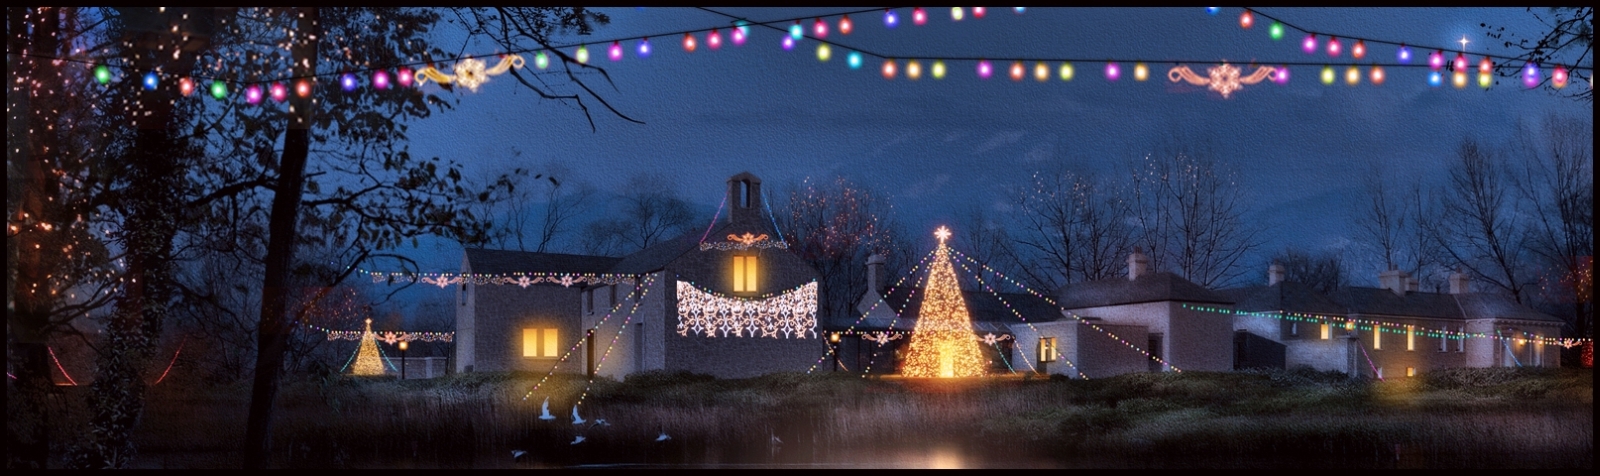 Manor house  christmas lights crop.jpg